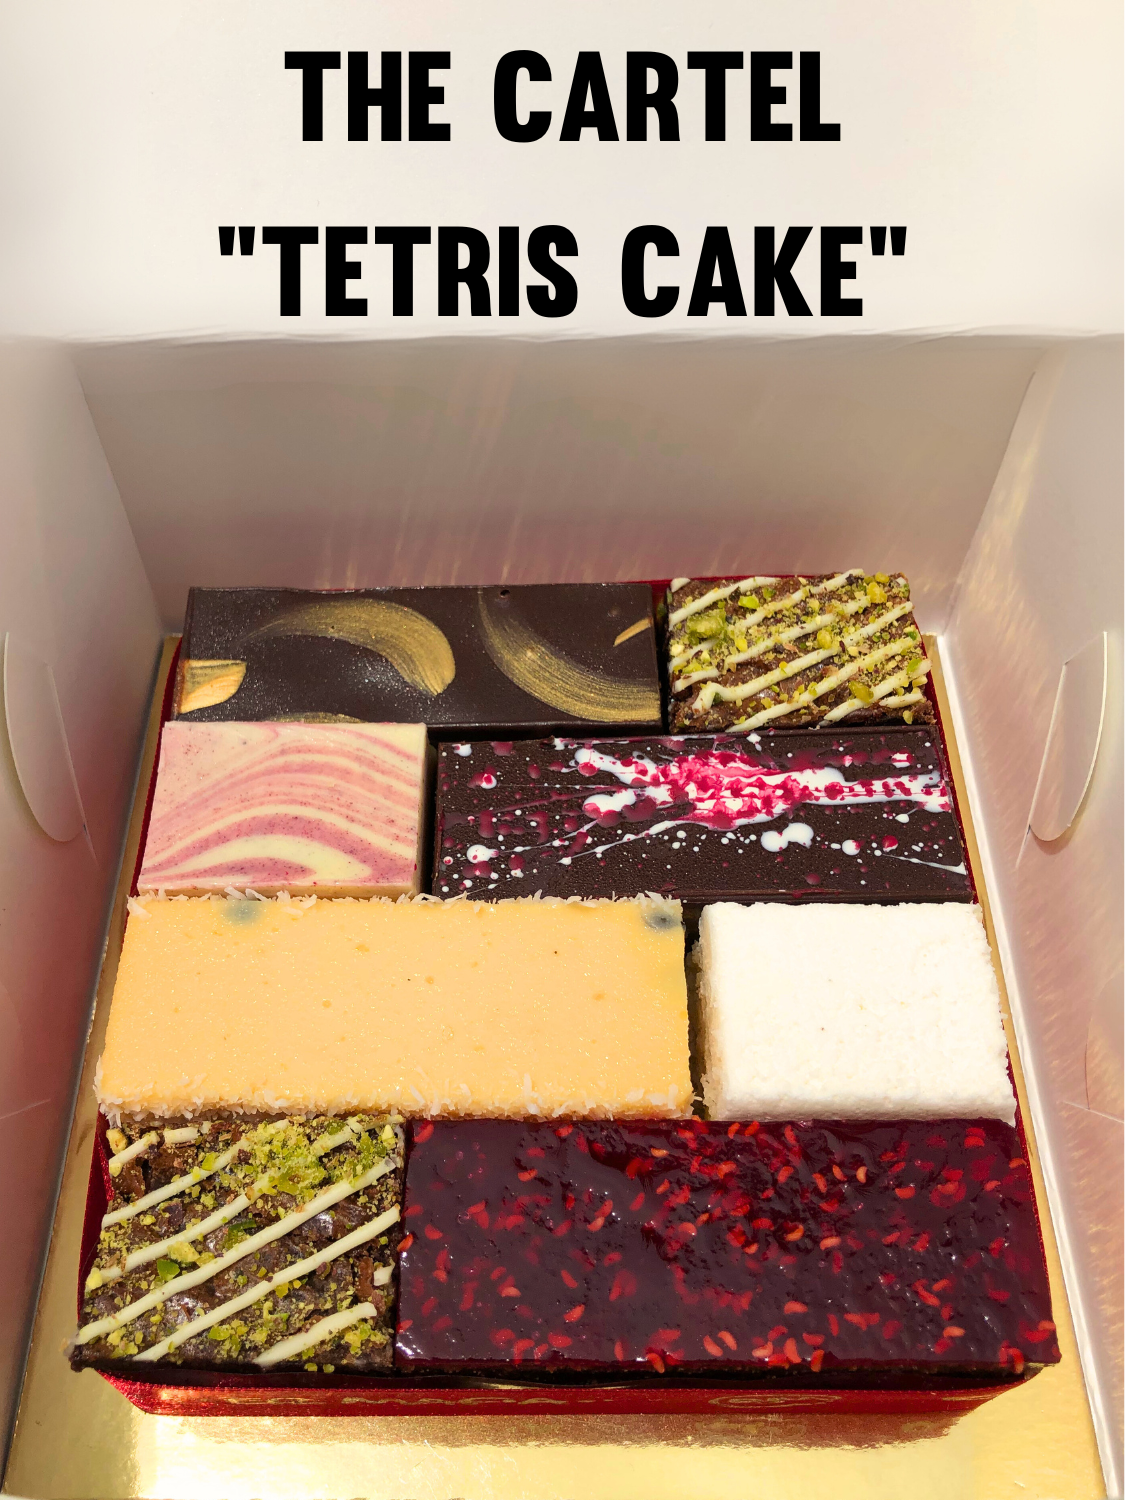 The Cartel "Tetris Cake" Gluten Free Dessert Cake Assorted Flavours